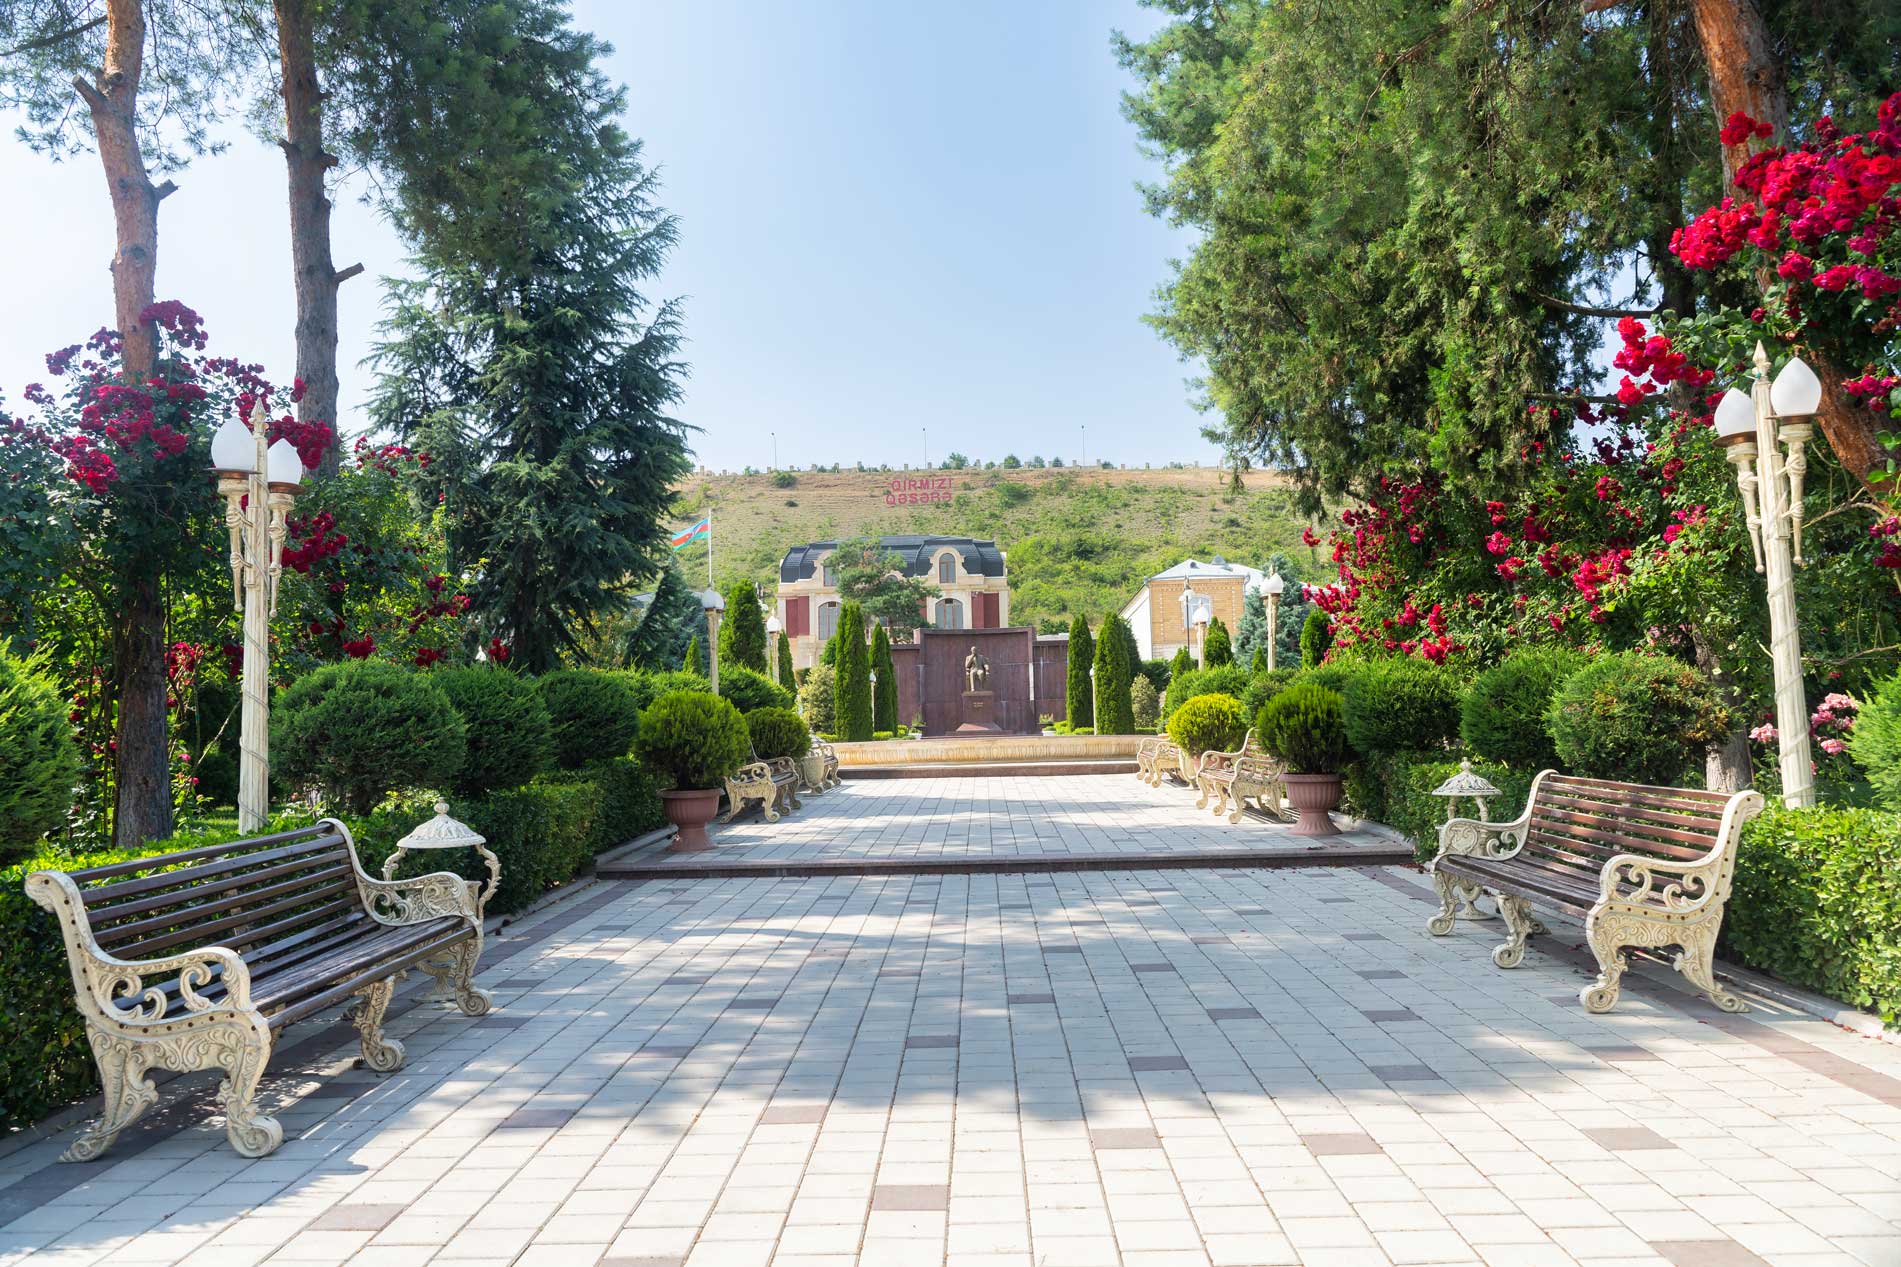 Heydar Aliyev Park